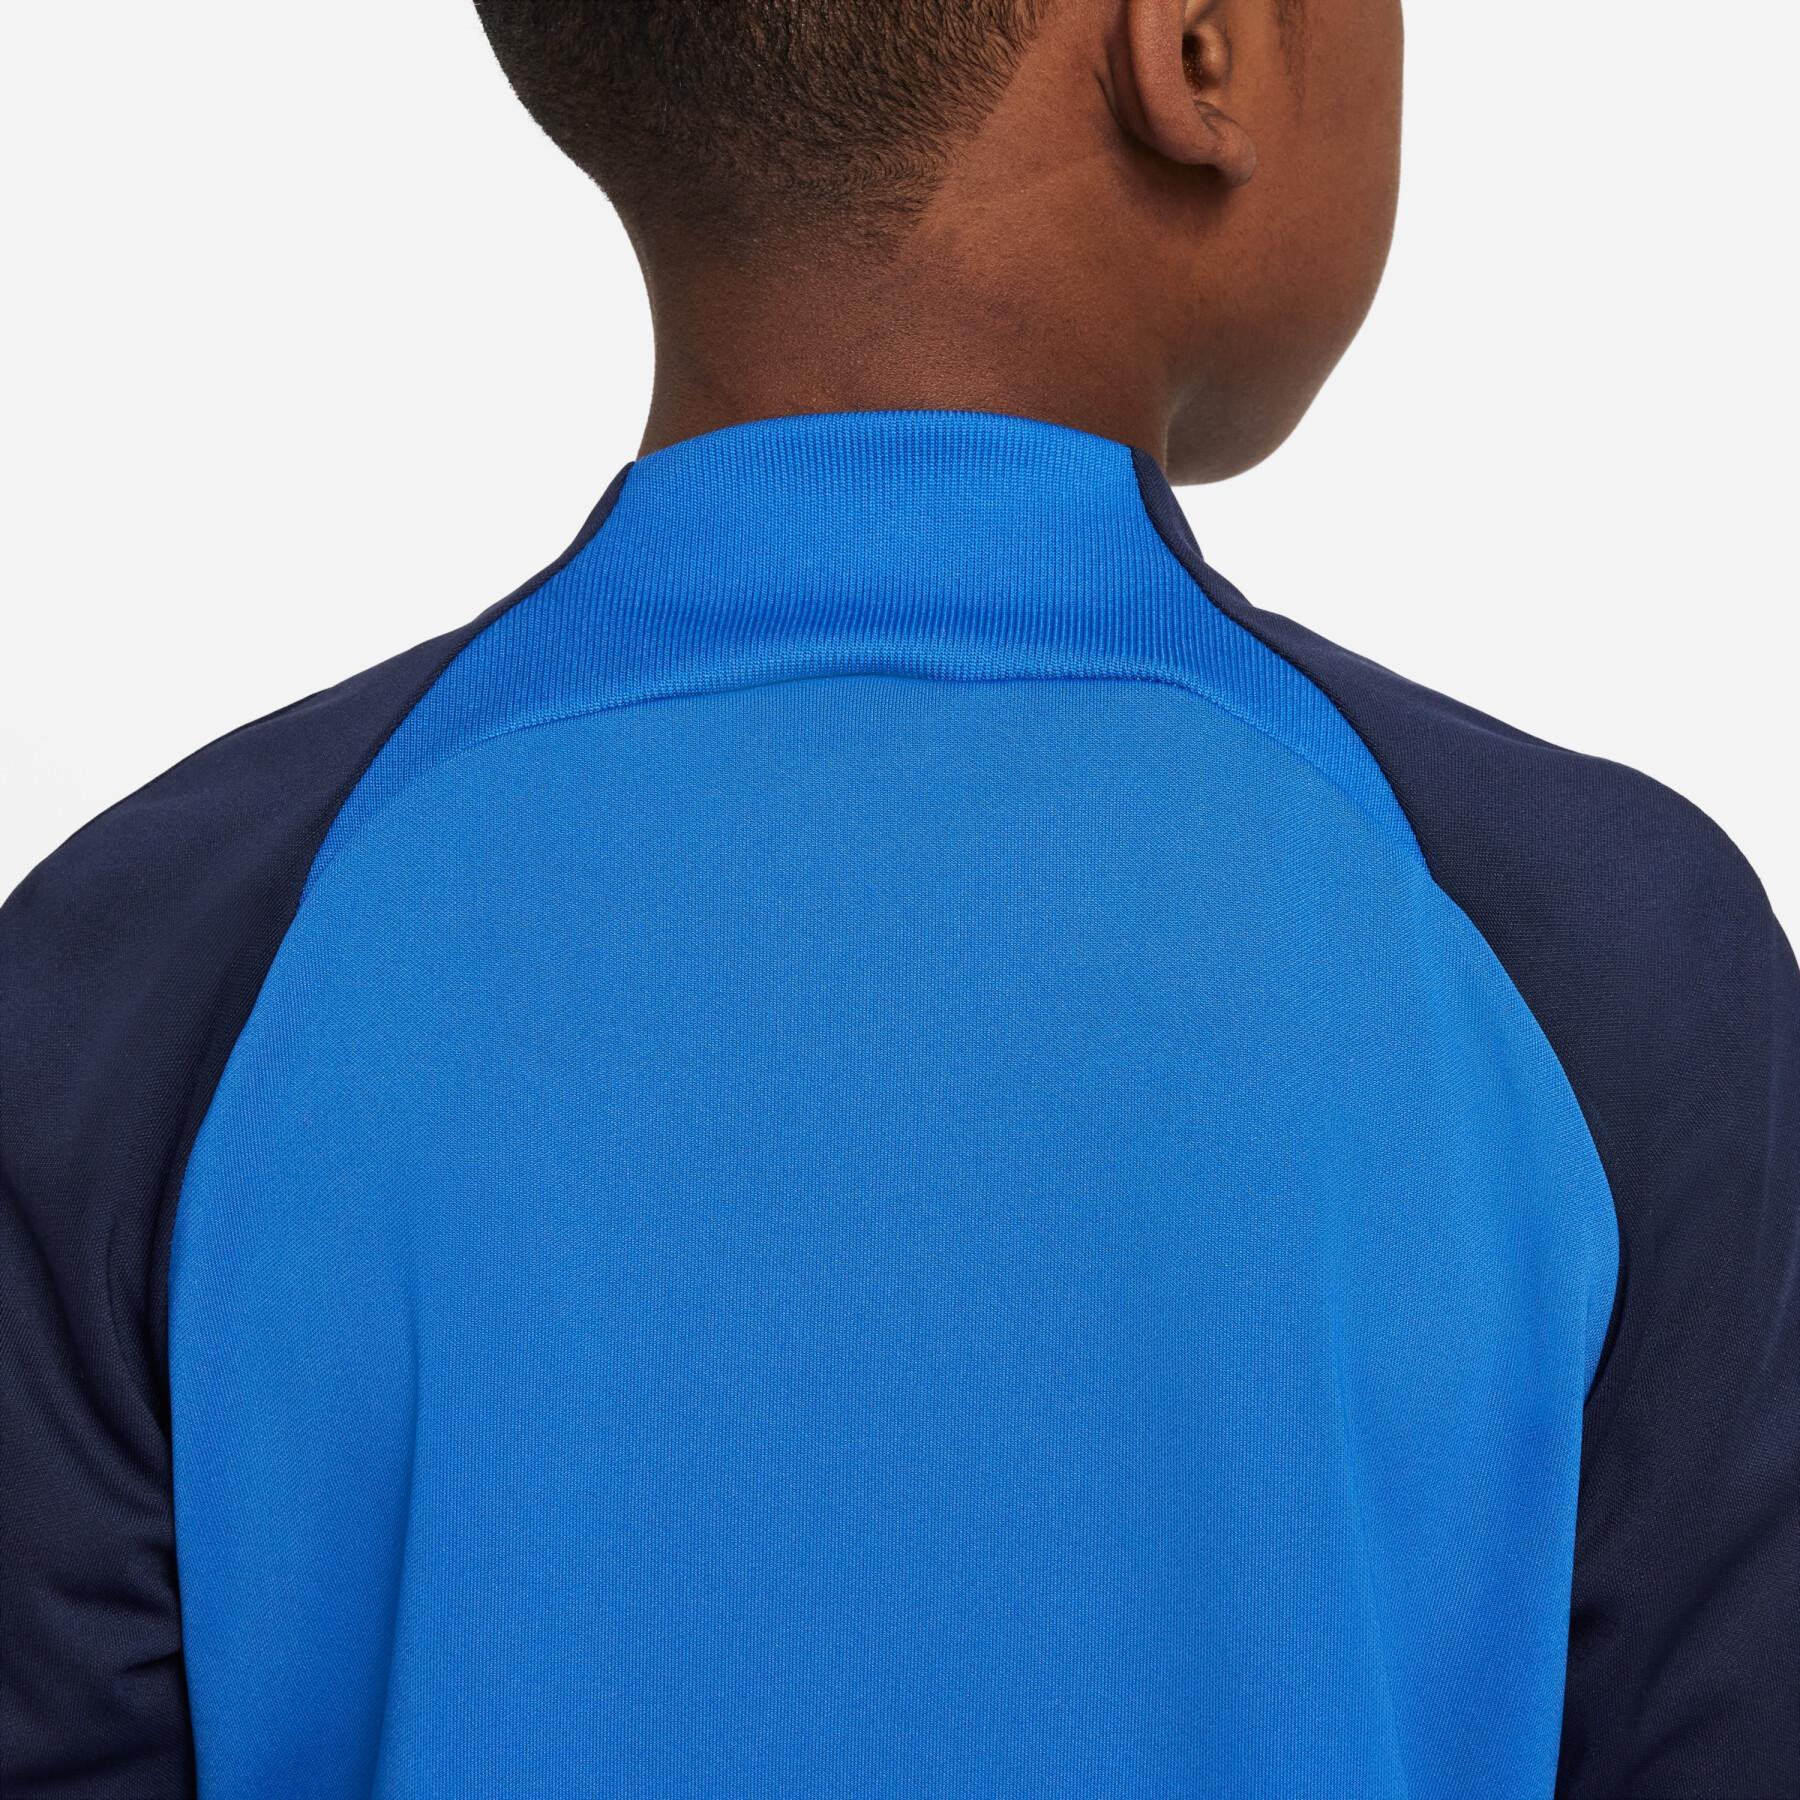 Children's tracksuit jacket Nike Dri-FIT Academy Pro